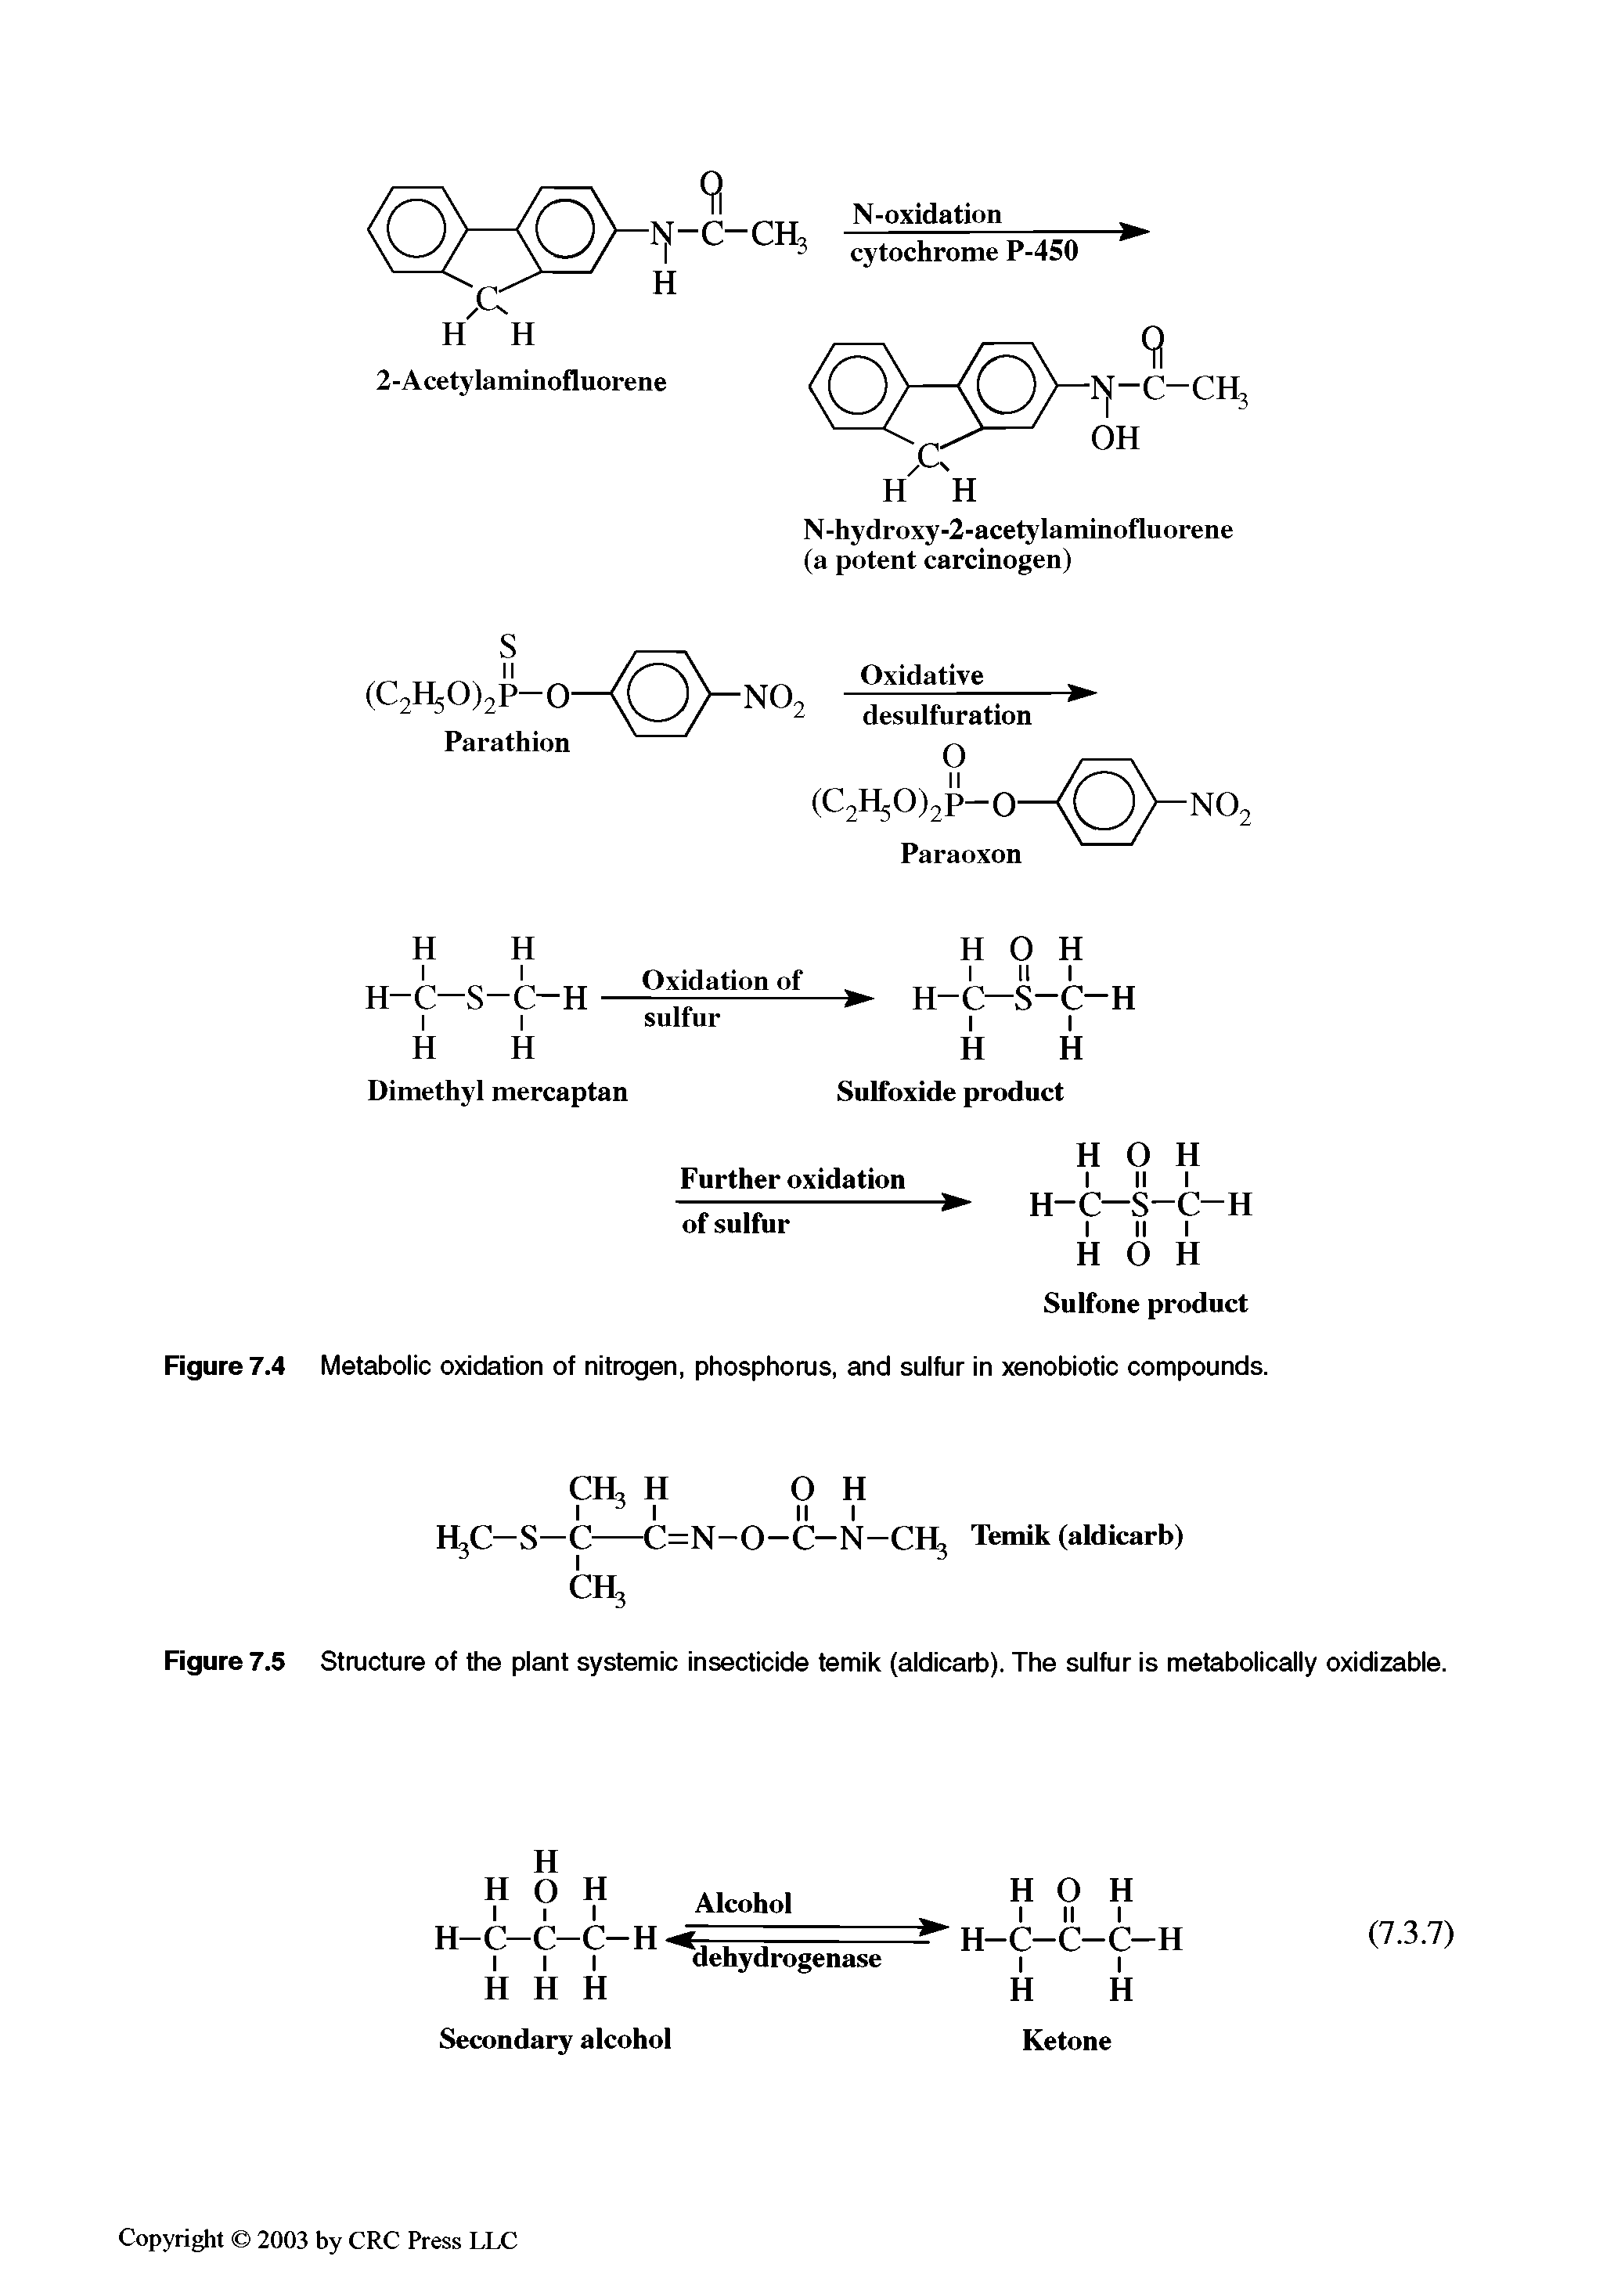 Figure 7.4 Metabolic oxidation of nitrogen, phosphorus, and sulfur in xenobiotic compounds.